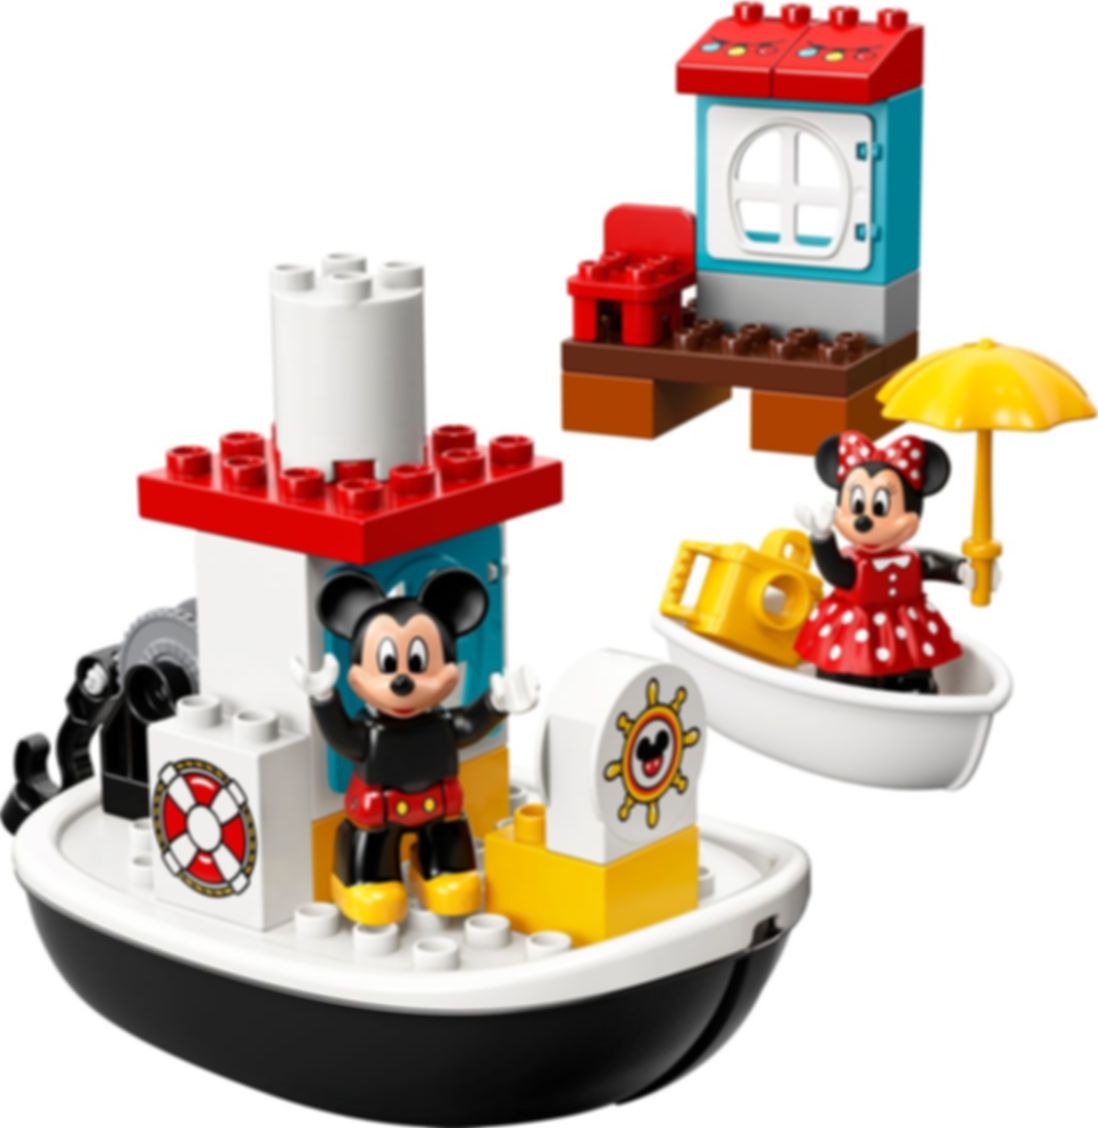 LEGO® DUPLO® Mickey's Boat components